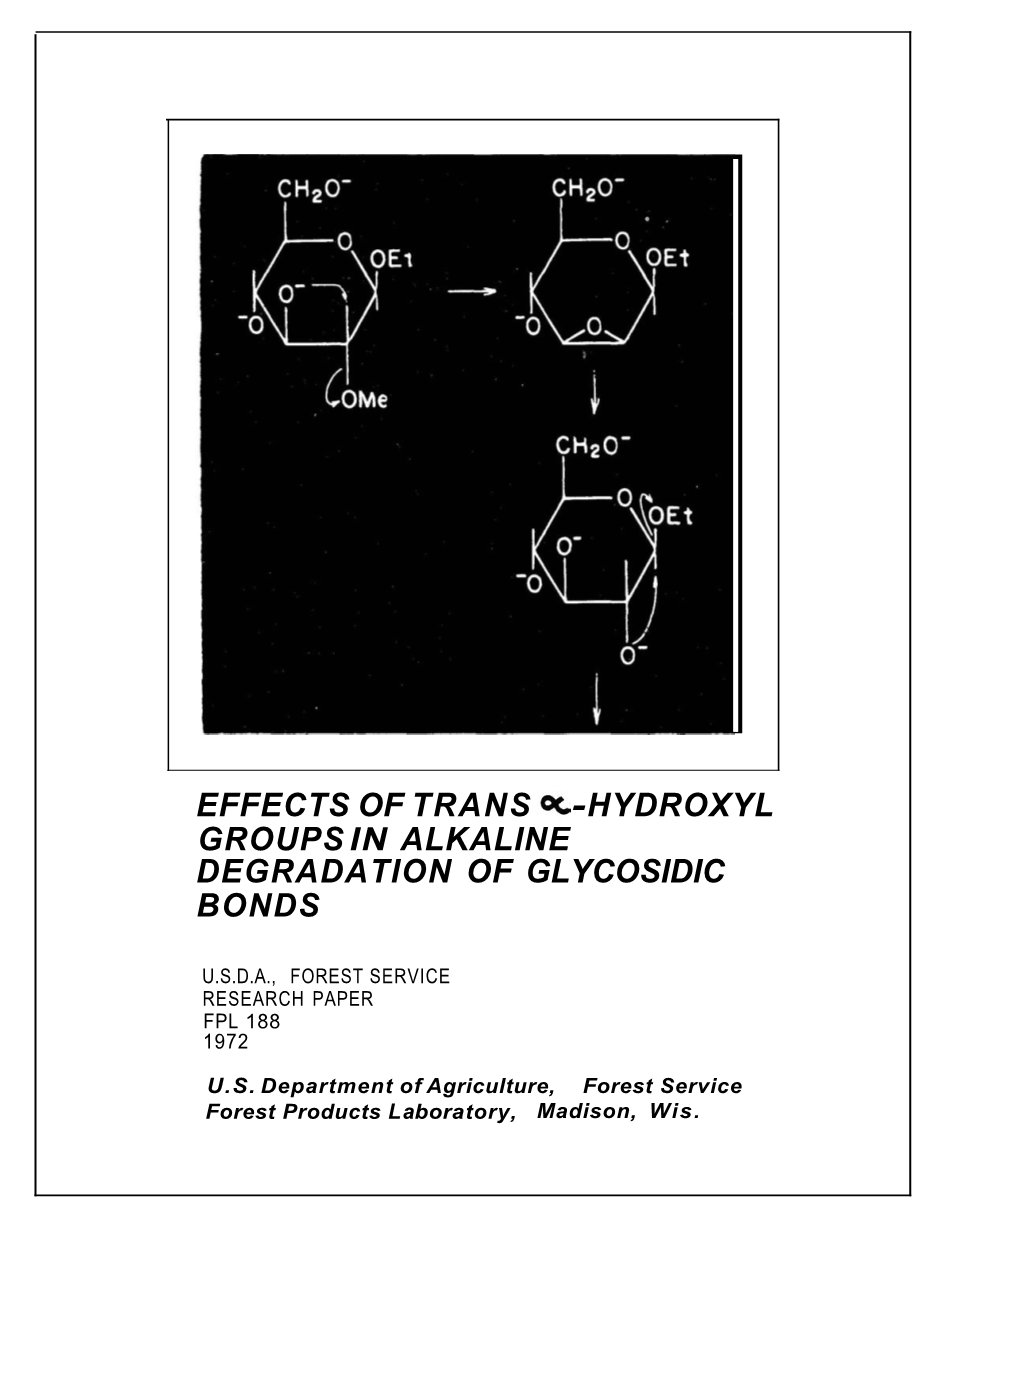 Effects of Trans Α-Hydroxyl Groups in Alkaline Degradation of Glycosidic Bonds